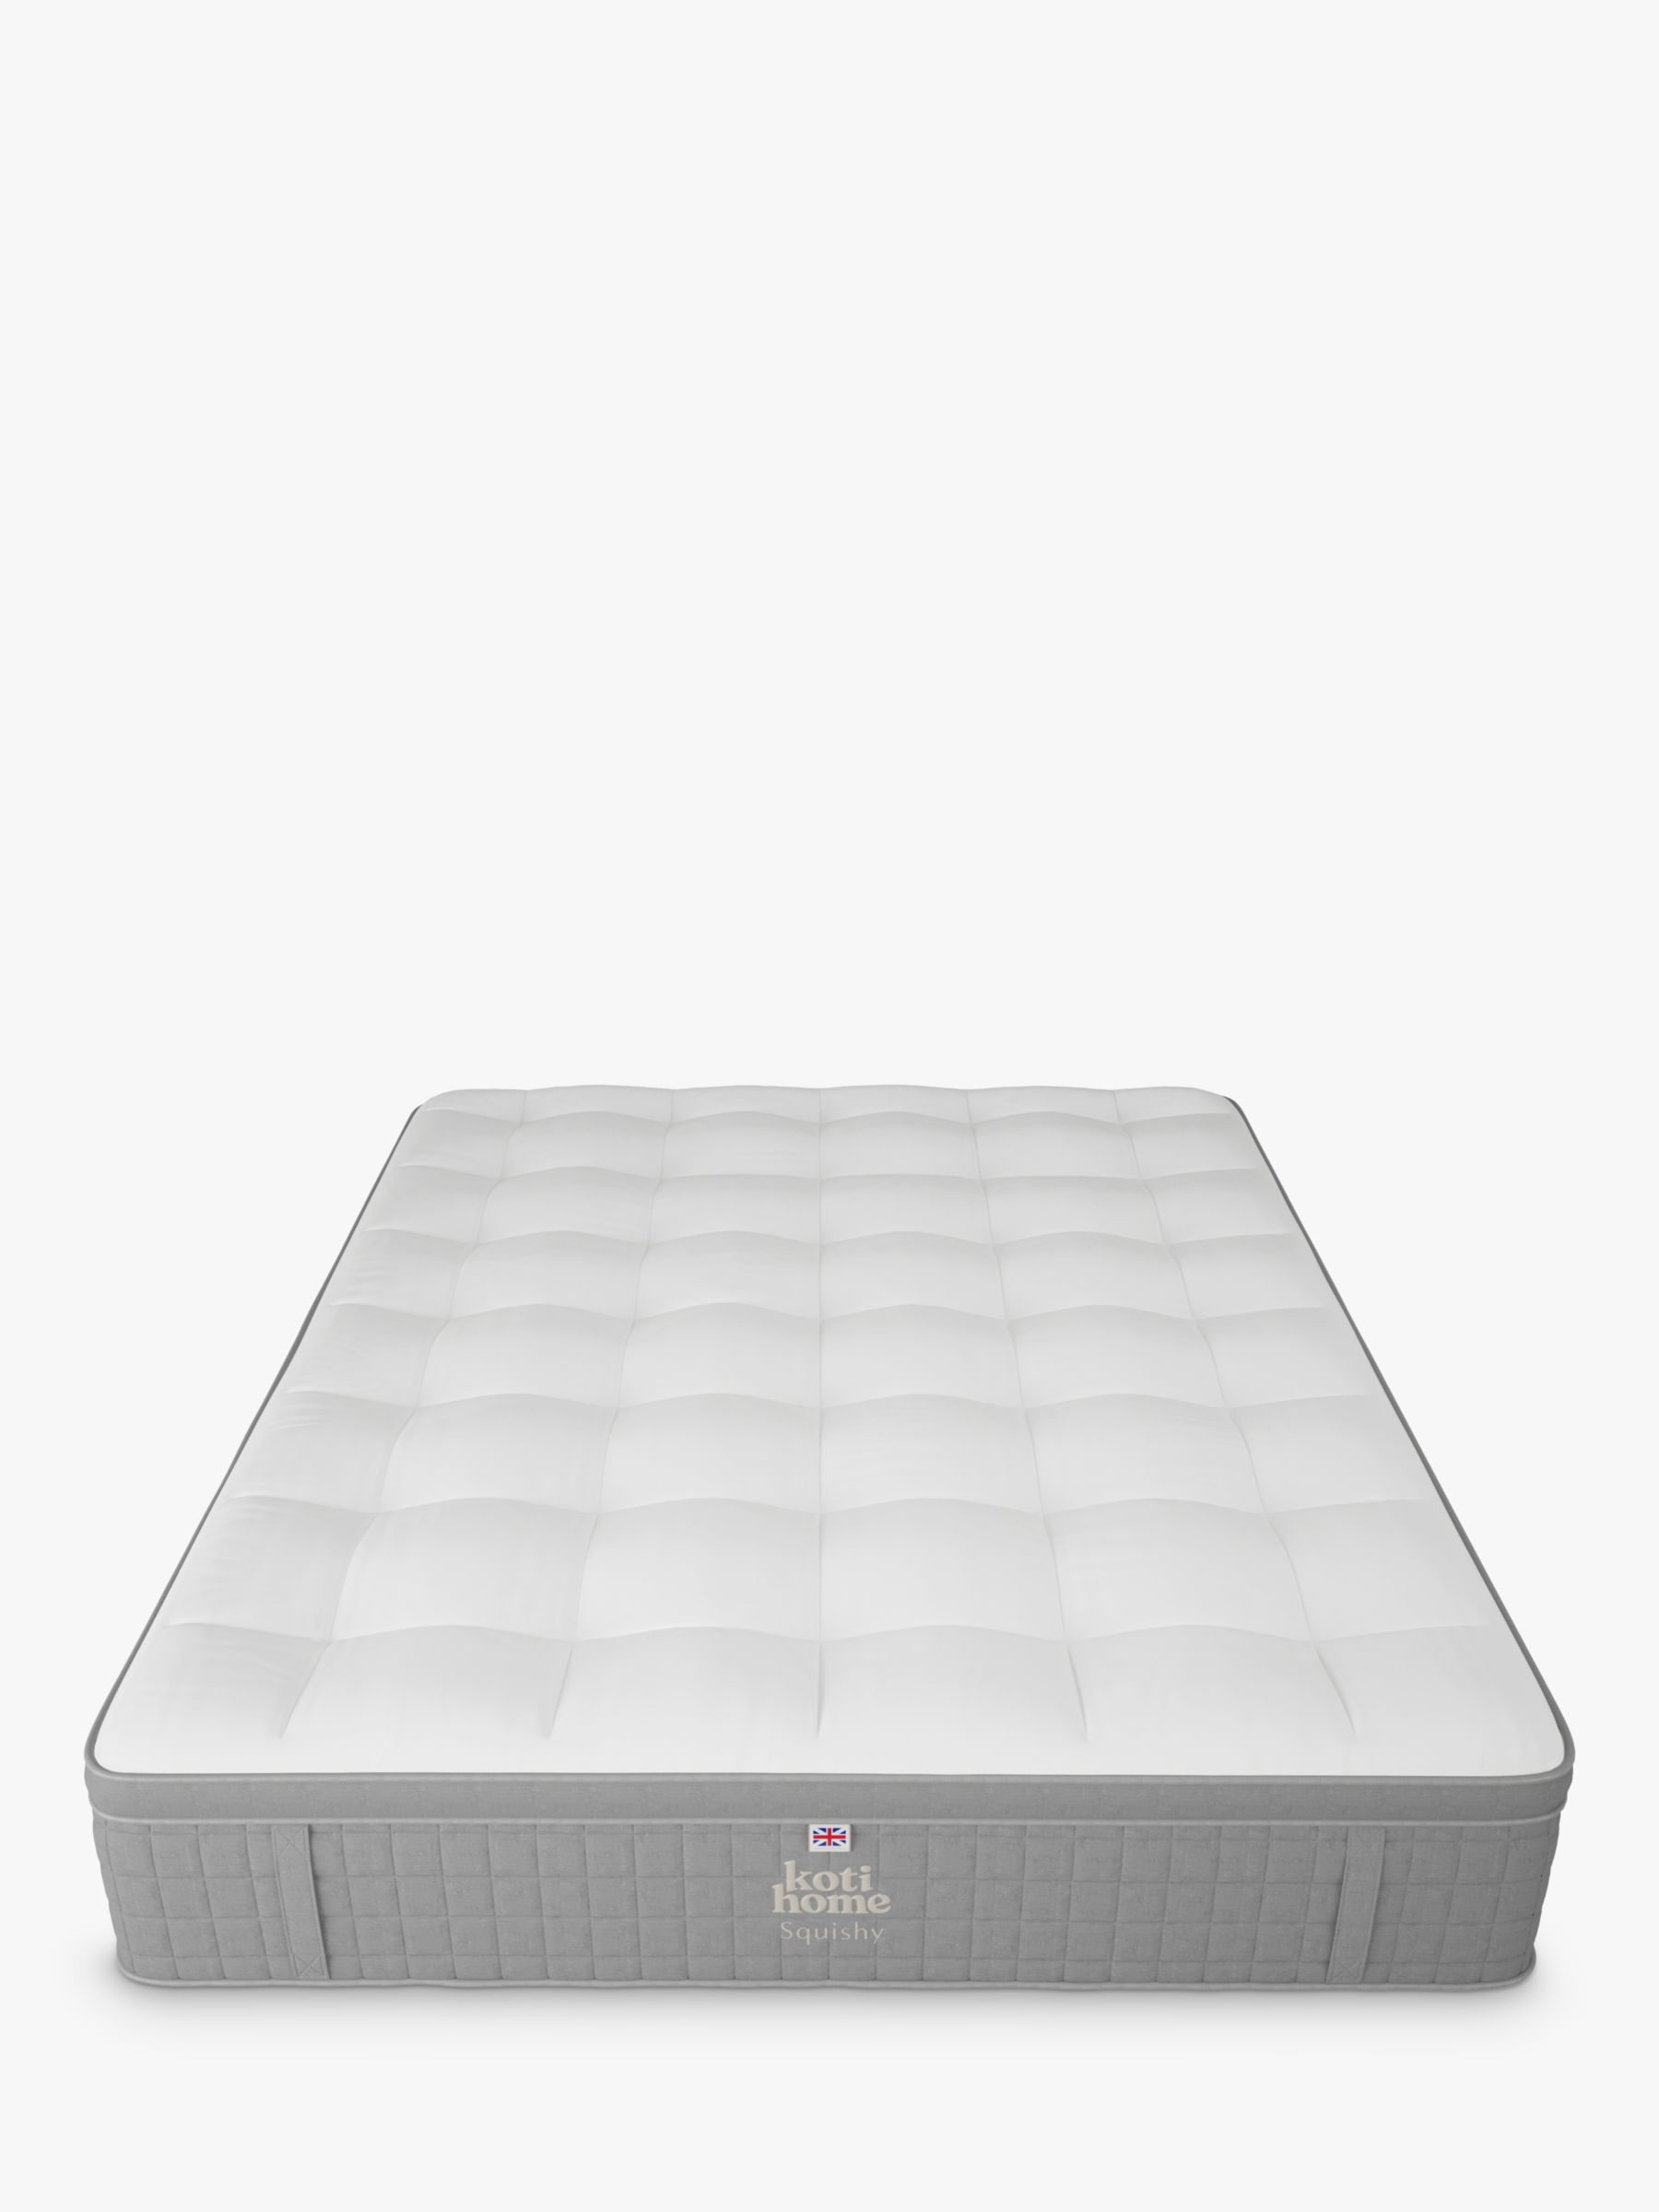 Photo of Koti home squishy pocket spring mattress medium support super king size